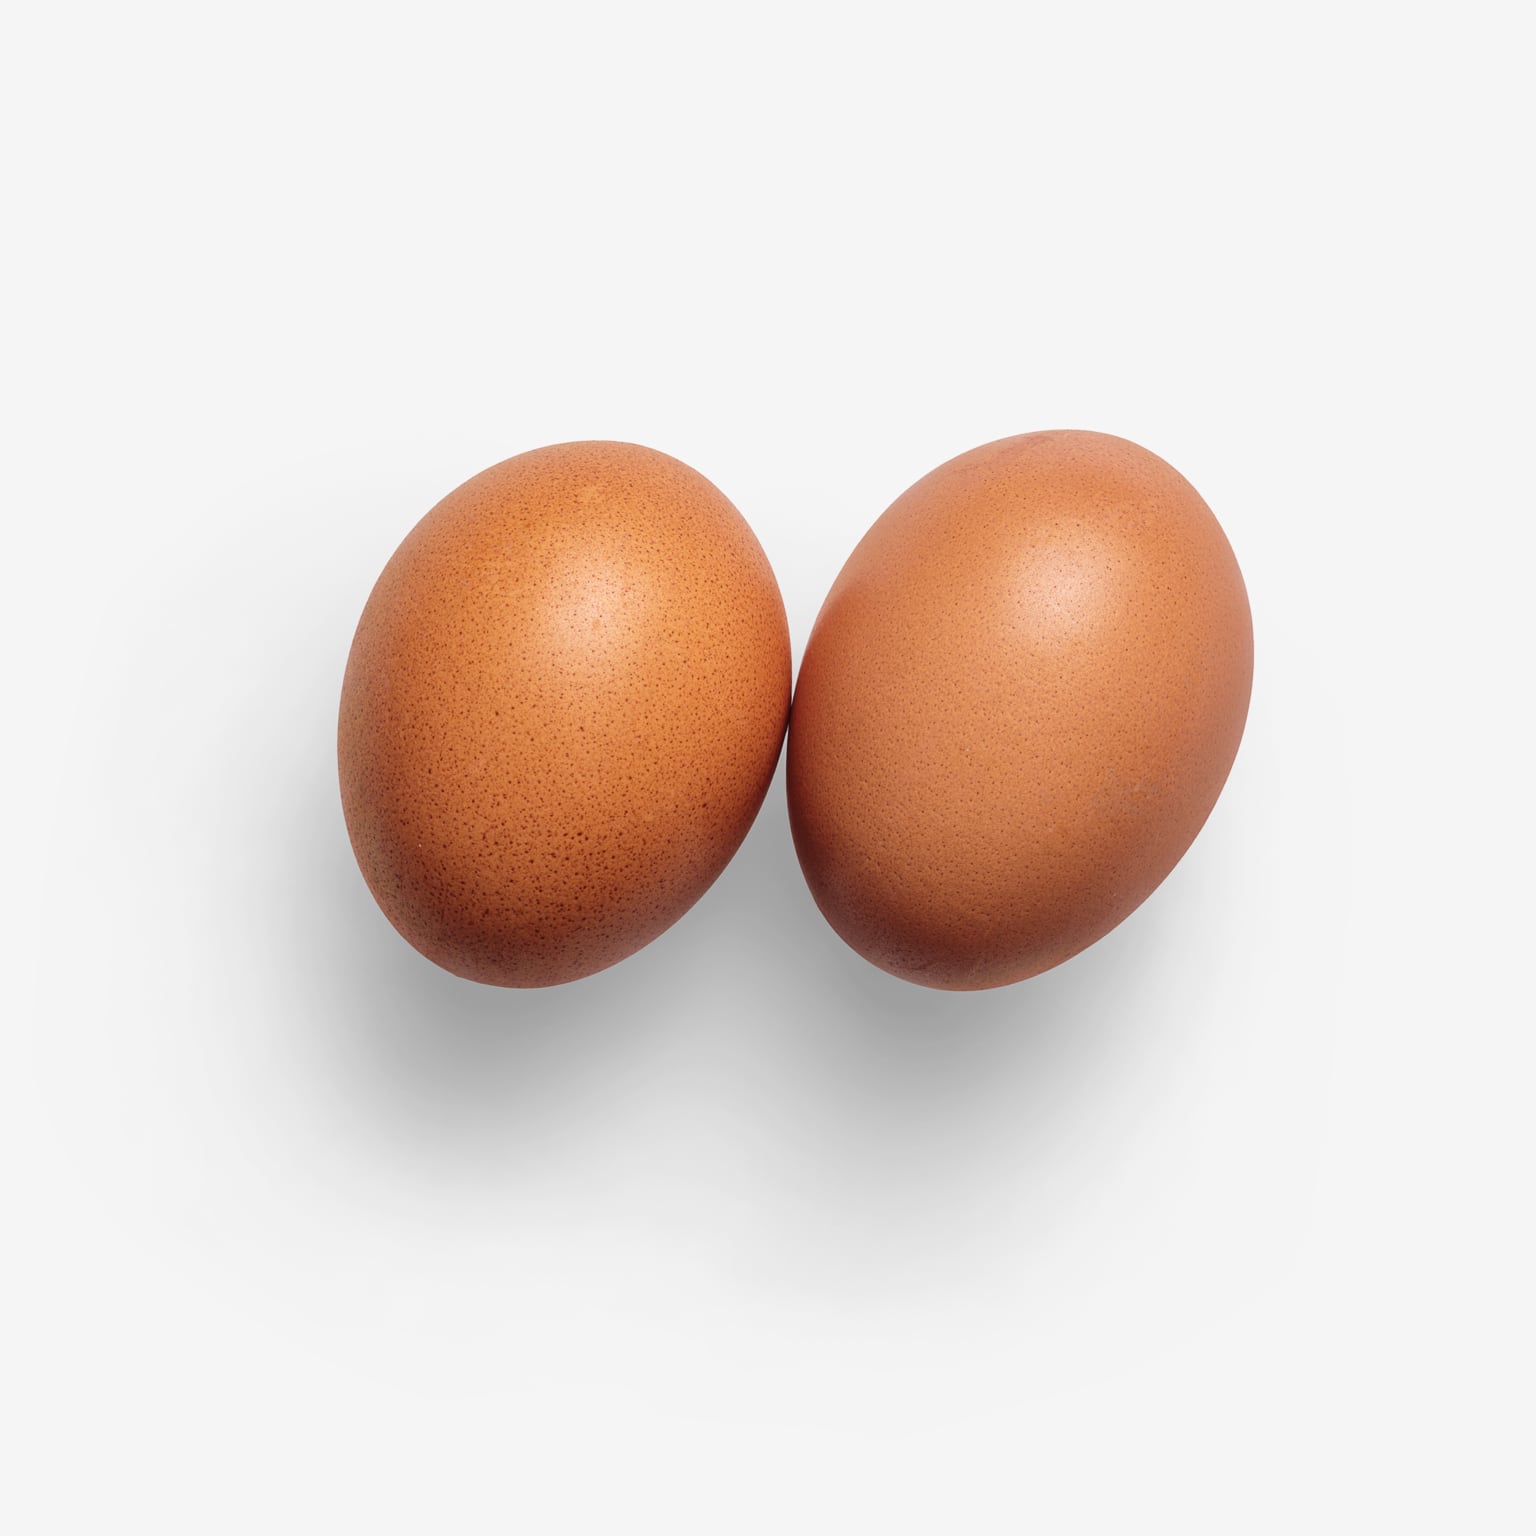 Egg graphic asset